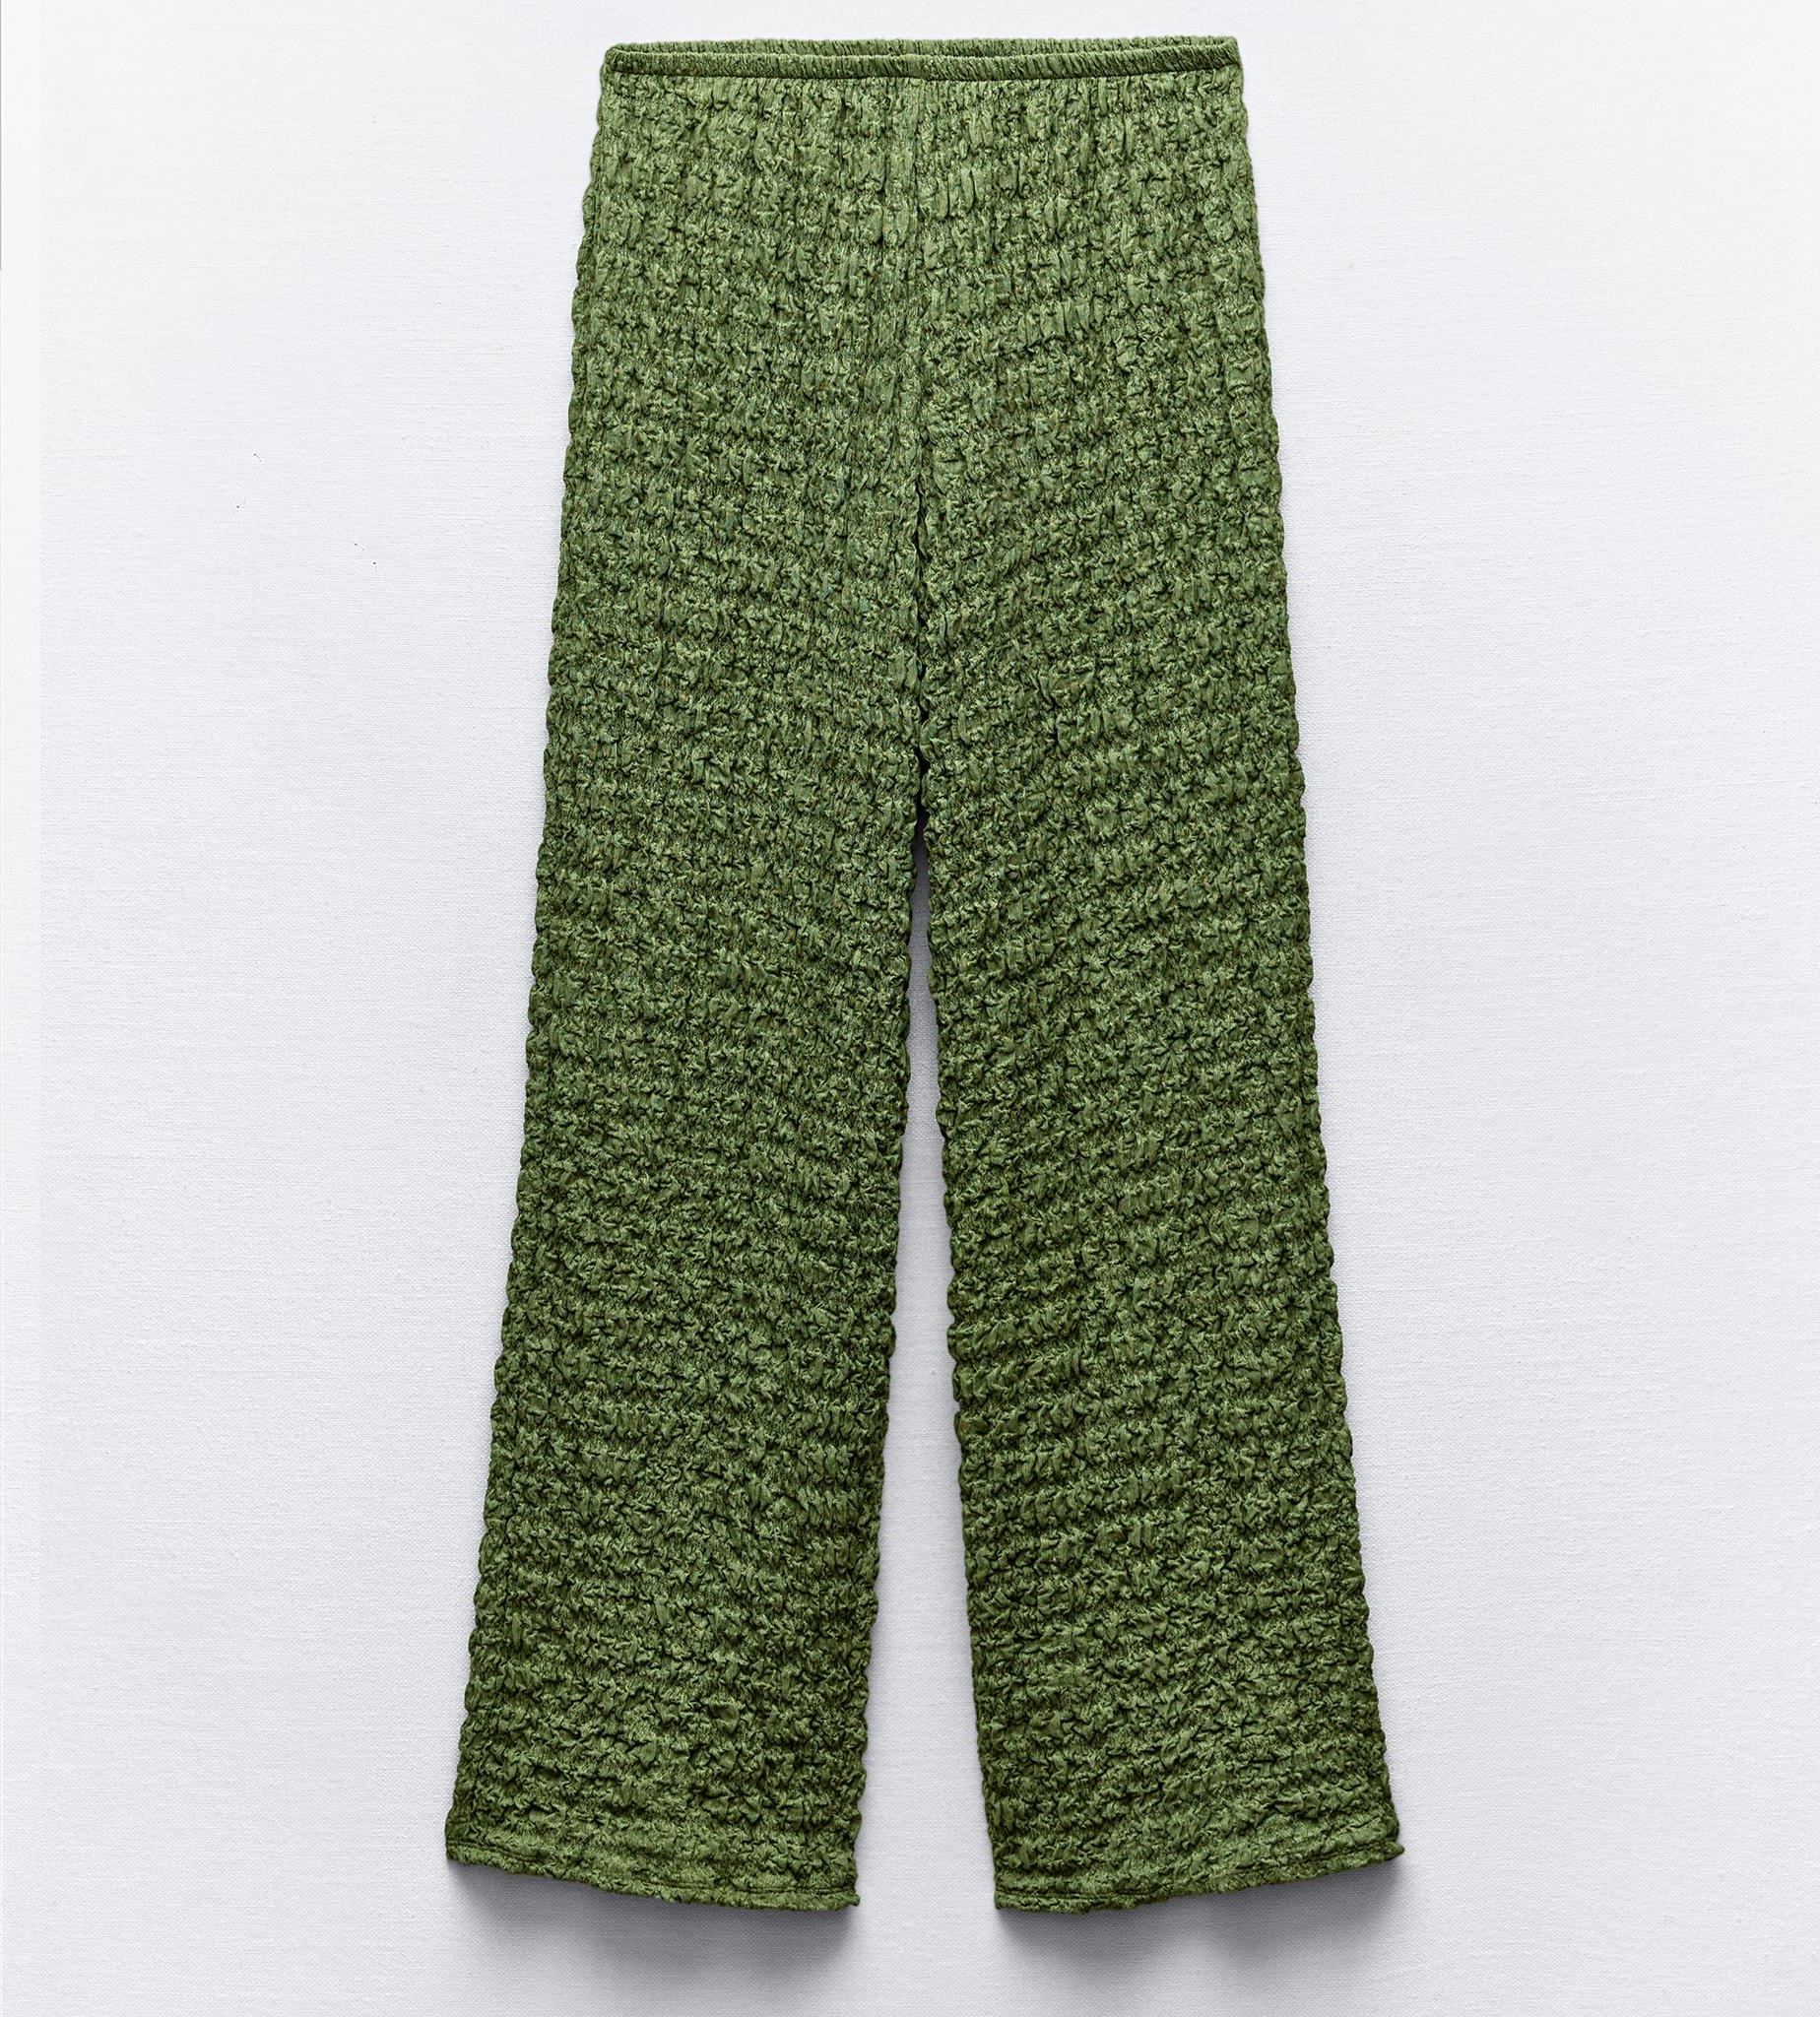 галстук zara textured with lines зеленый Брюки Zara Textured, зеленый